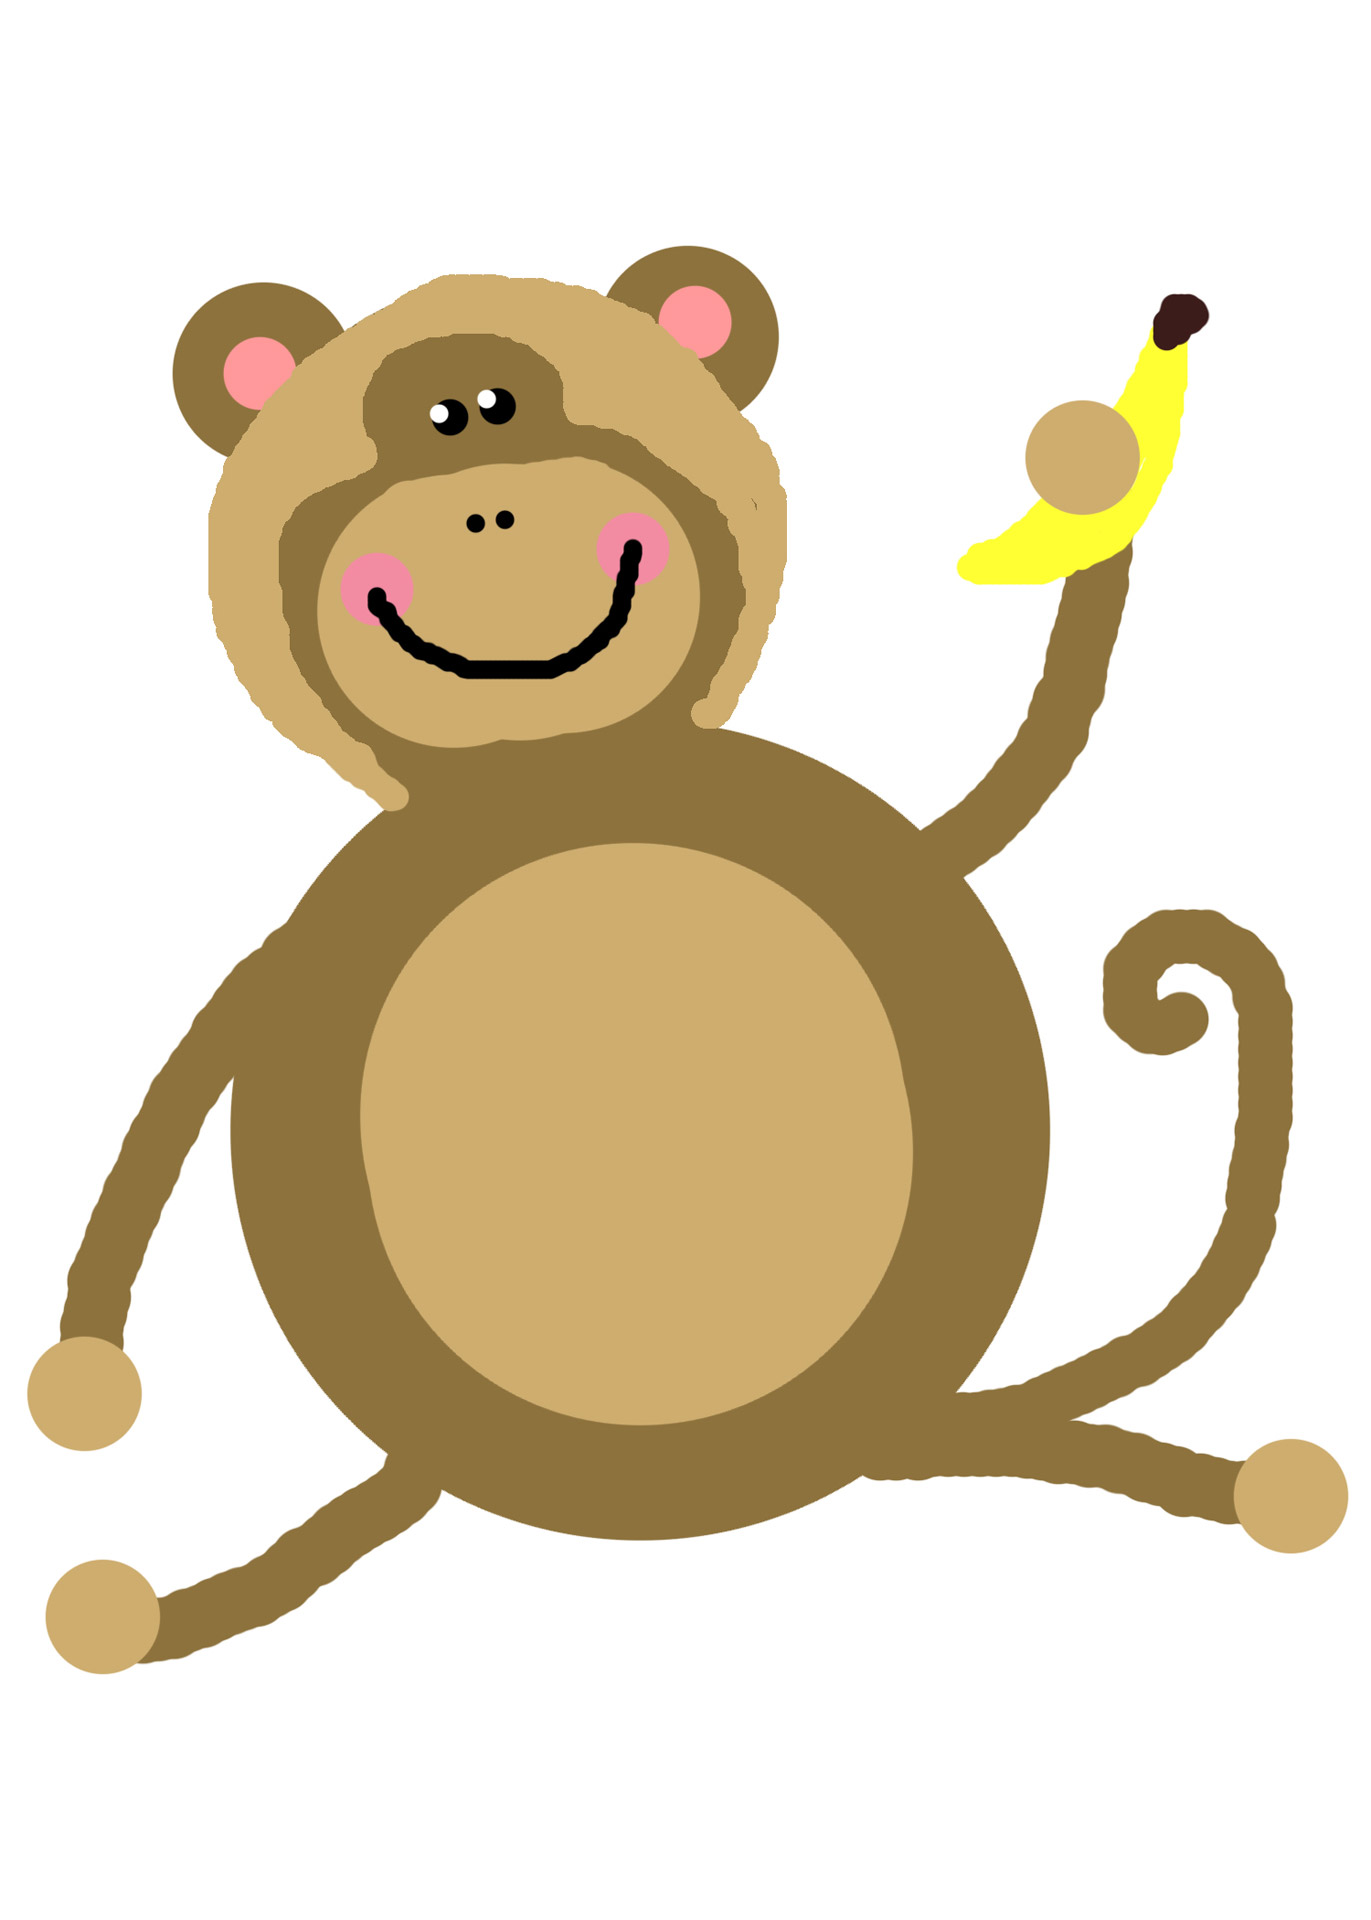 monkey illustrations clipart - photo #22